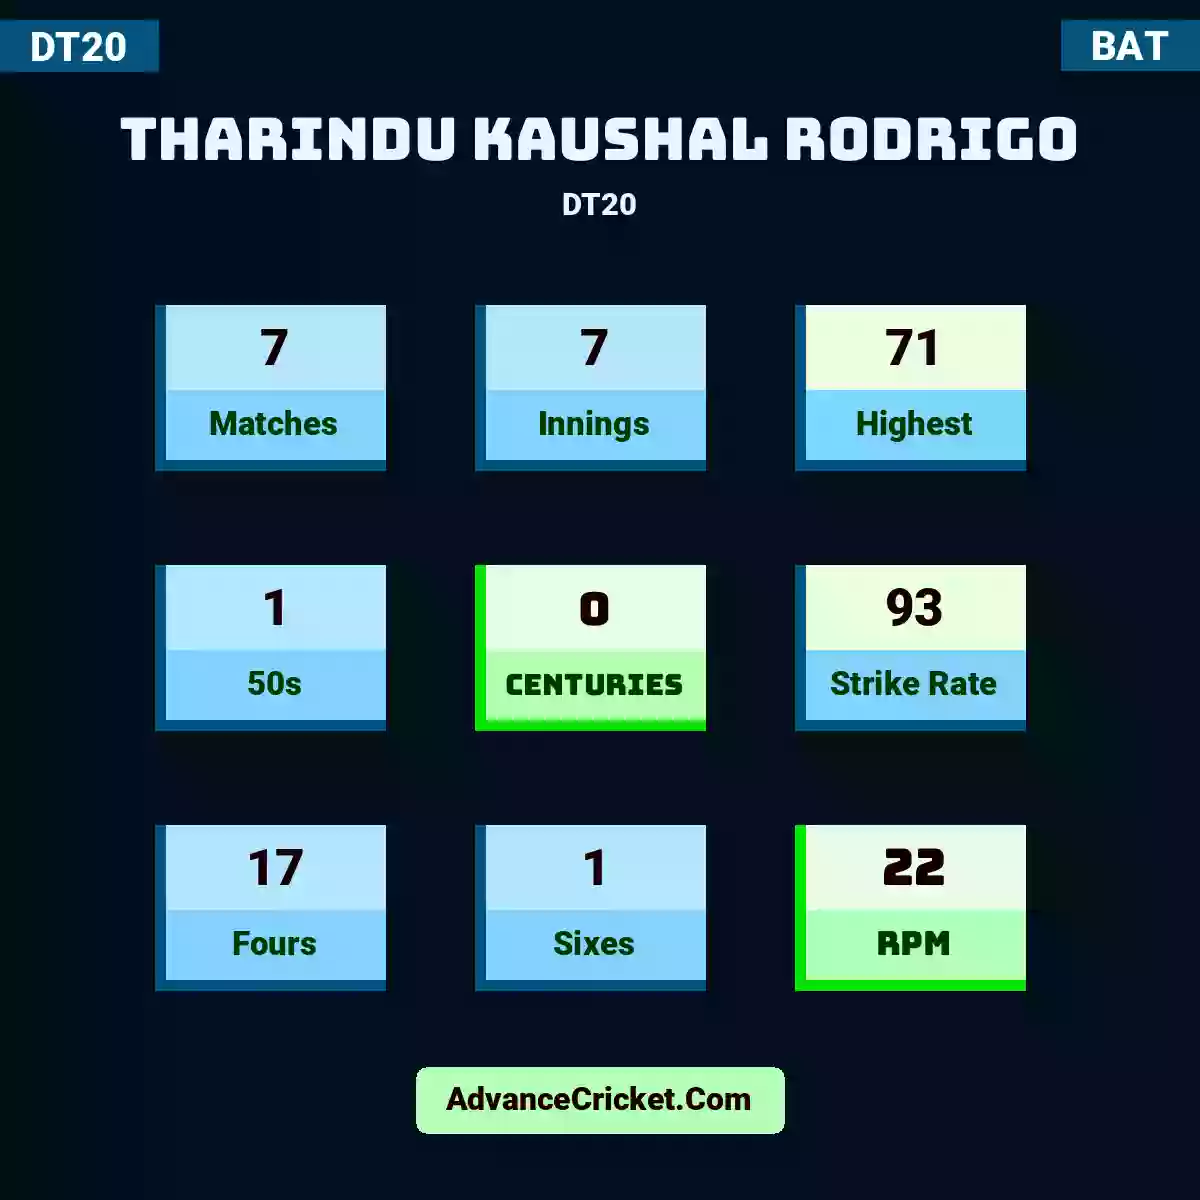 Tharindu Kaushal Rodrigo DT20 , Tharindu Kaushal Rodrigo played 7 matches, scored 71 runs as highest, 1 half-centuries, and 0 centuries, with a strike rate of 93. T.Kaushal.Rodrigo hit 17 fours and 1 sixes, with an RPM of 22.